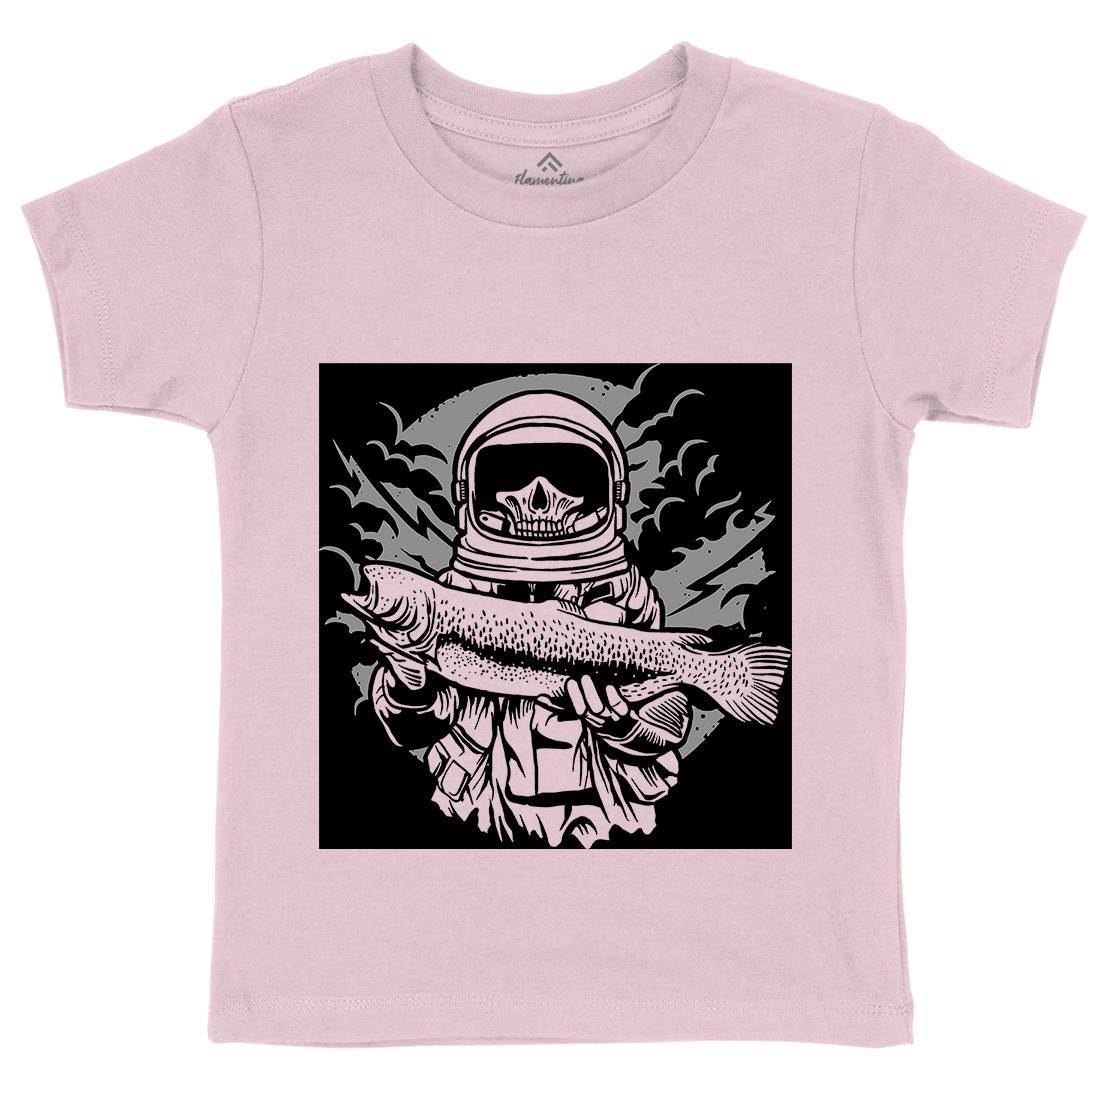 Astronaut Fishing Kids Crew Neck T-Shirt Space A504